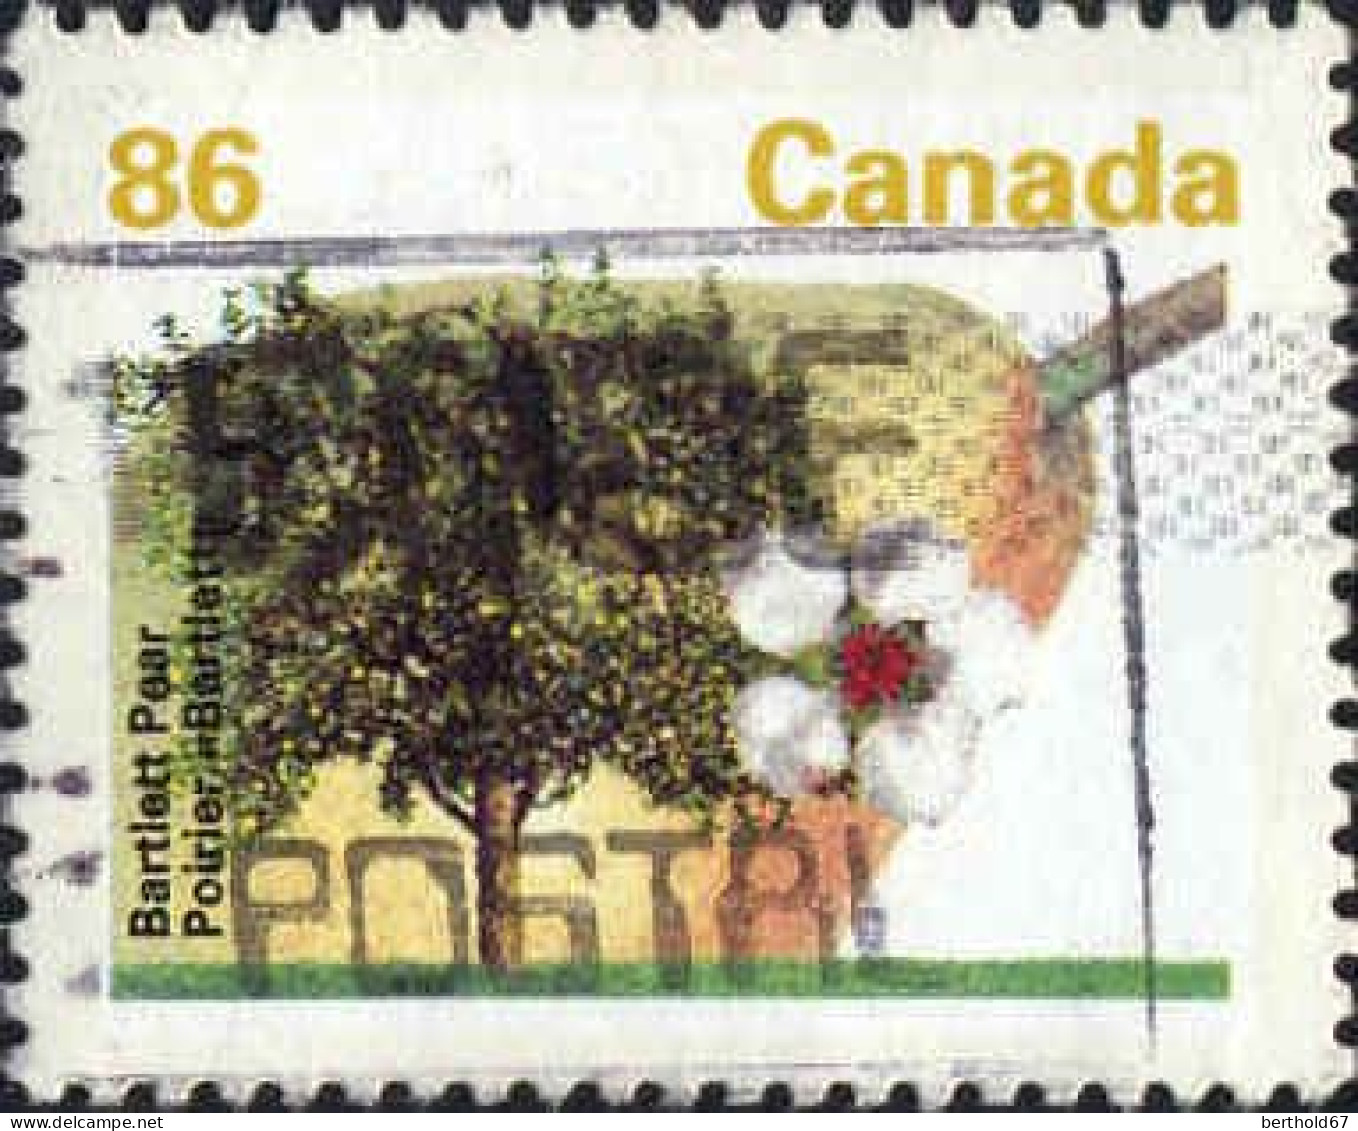 Canada Poste Obl Yv:1295 Mi:1342A Bartlett Pear Poirier Bartlett (Belle Obl.mécanique) - Usati